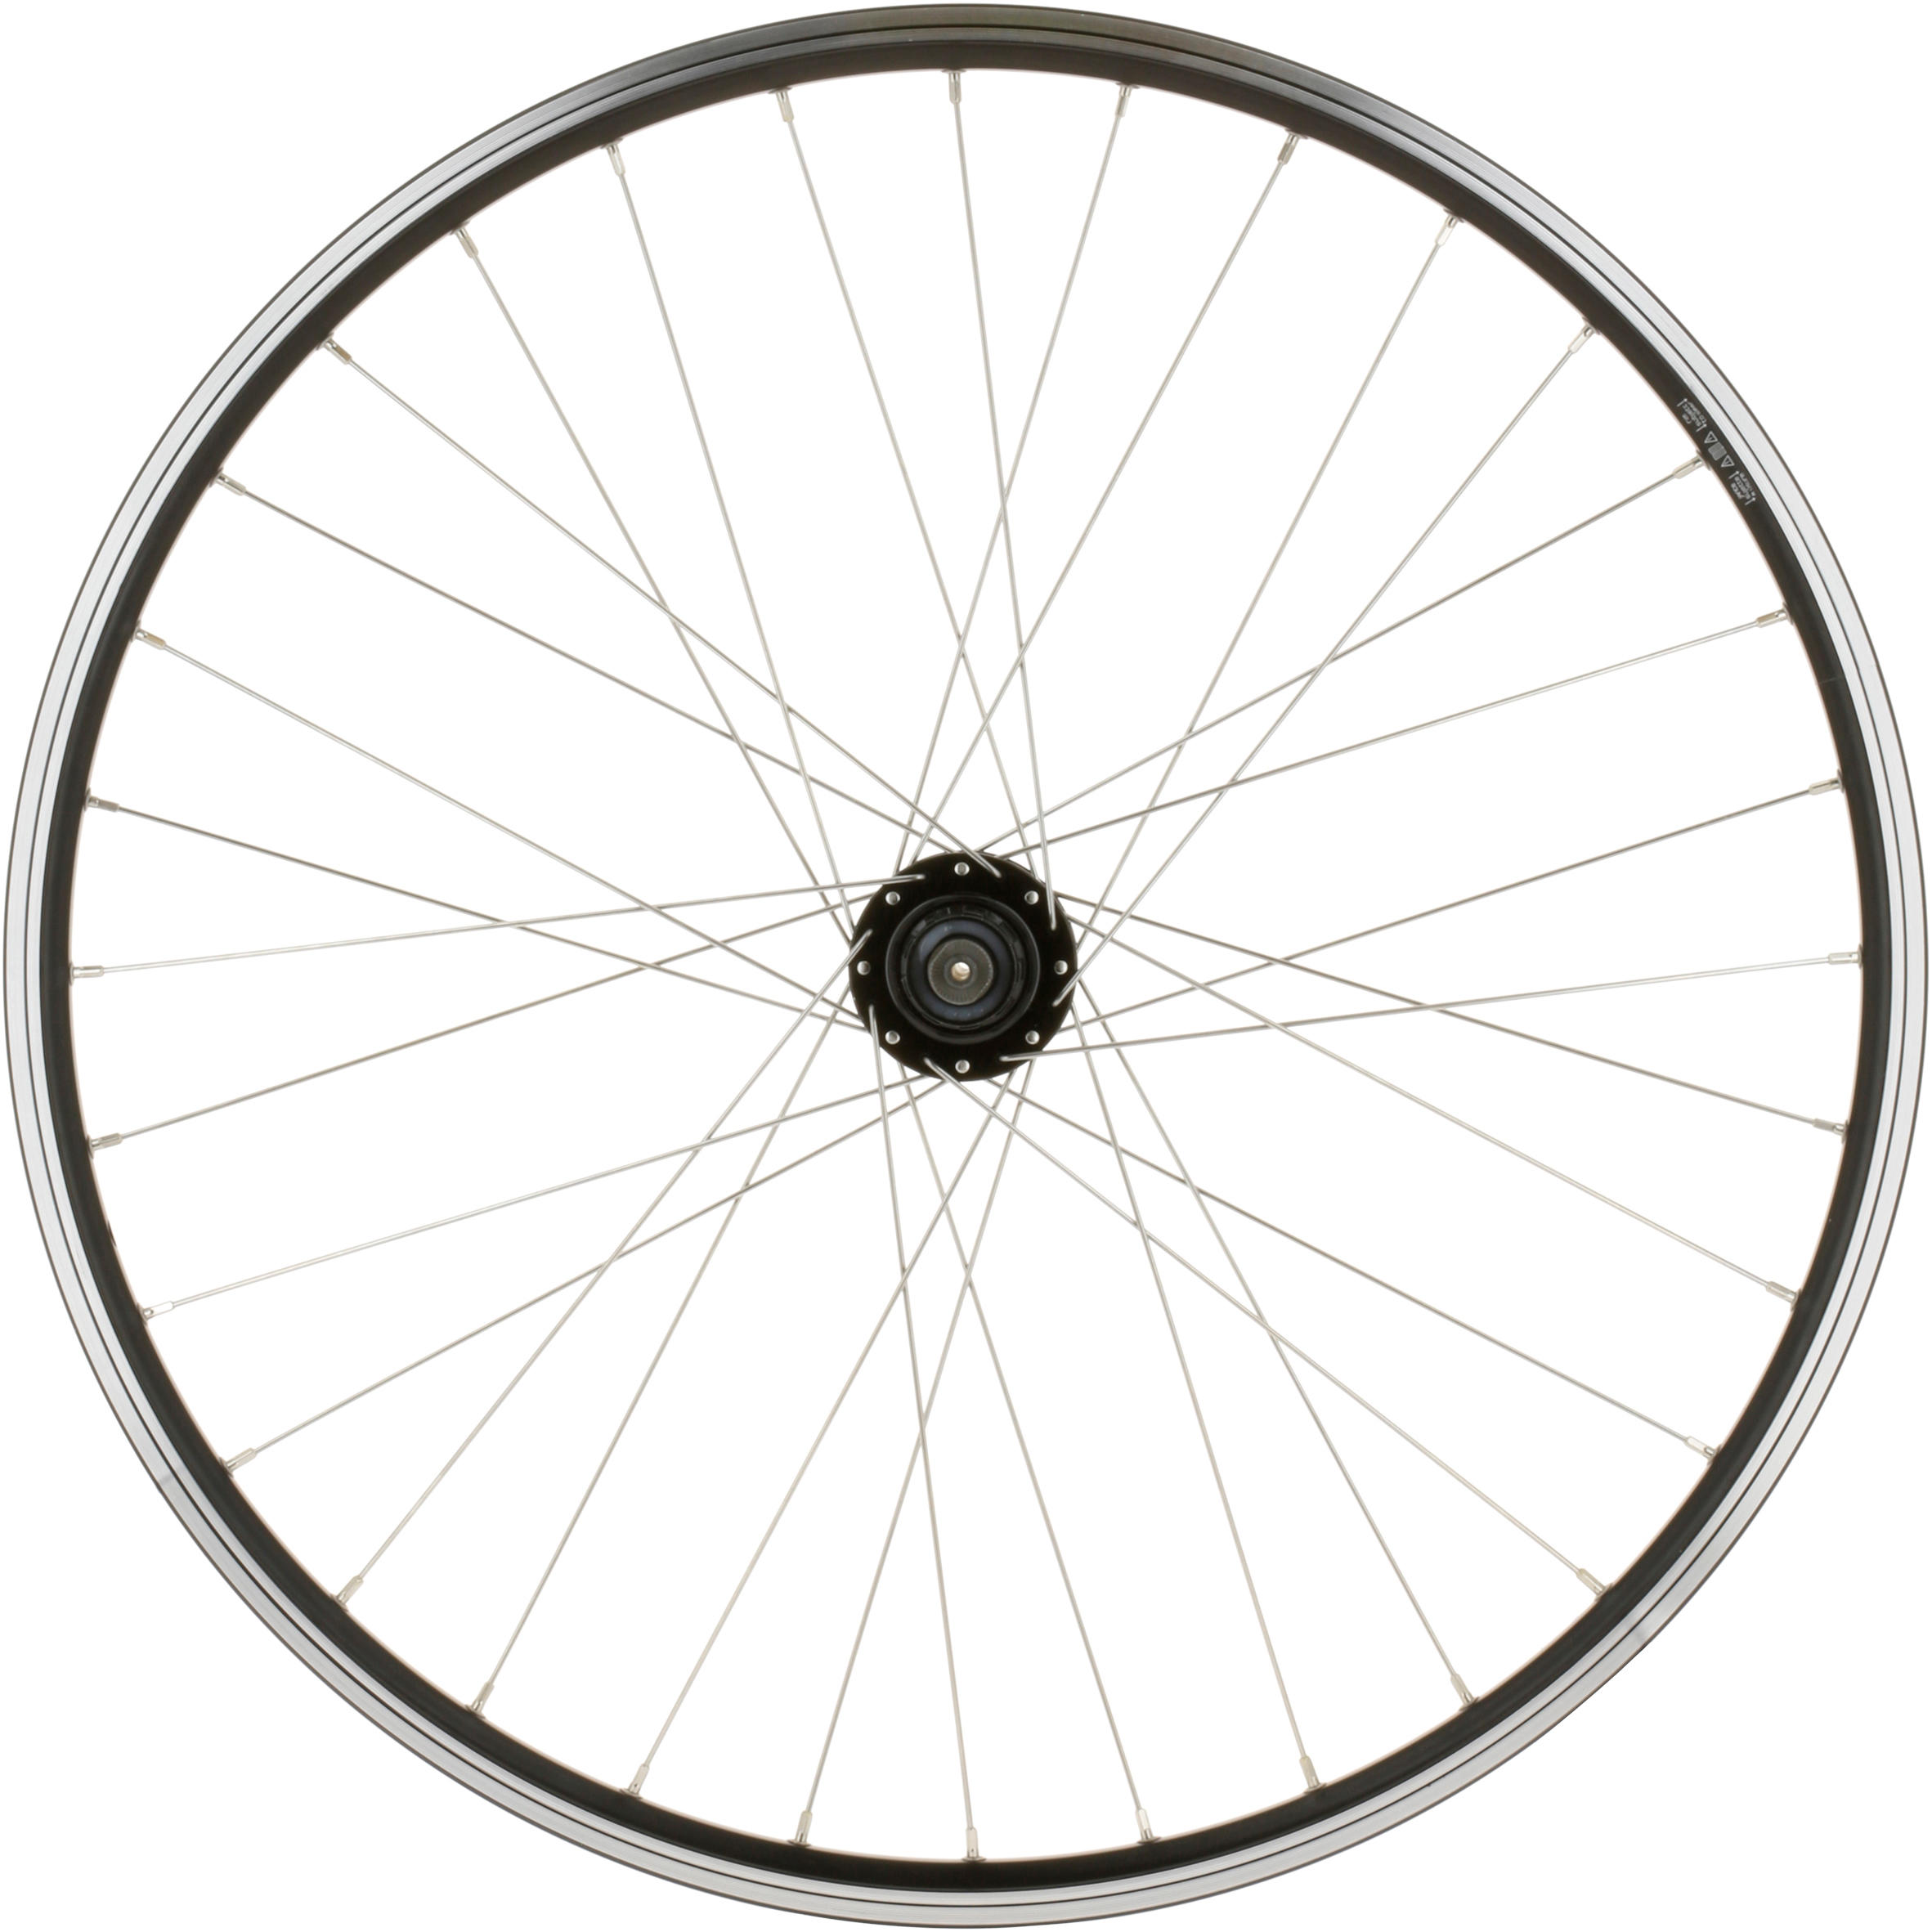 26 mountain bike disc wheelset